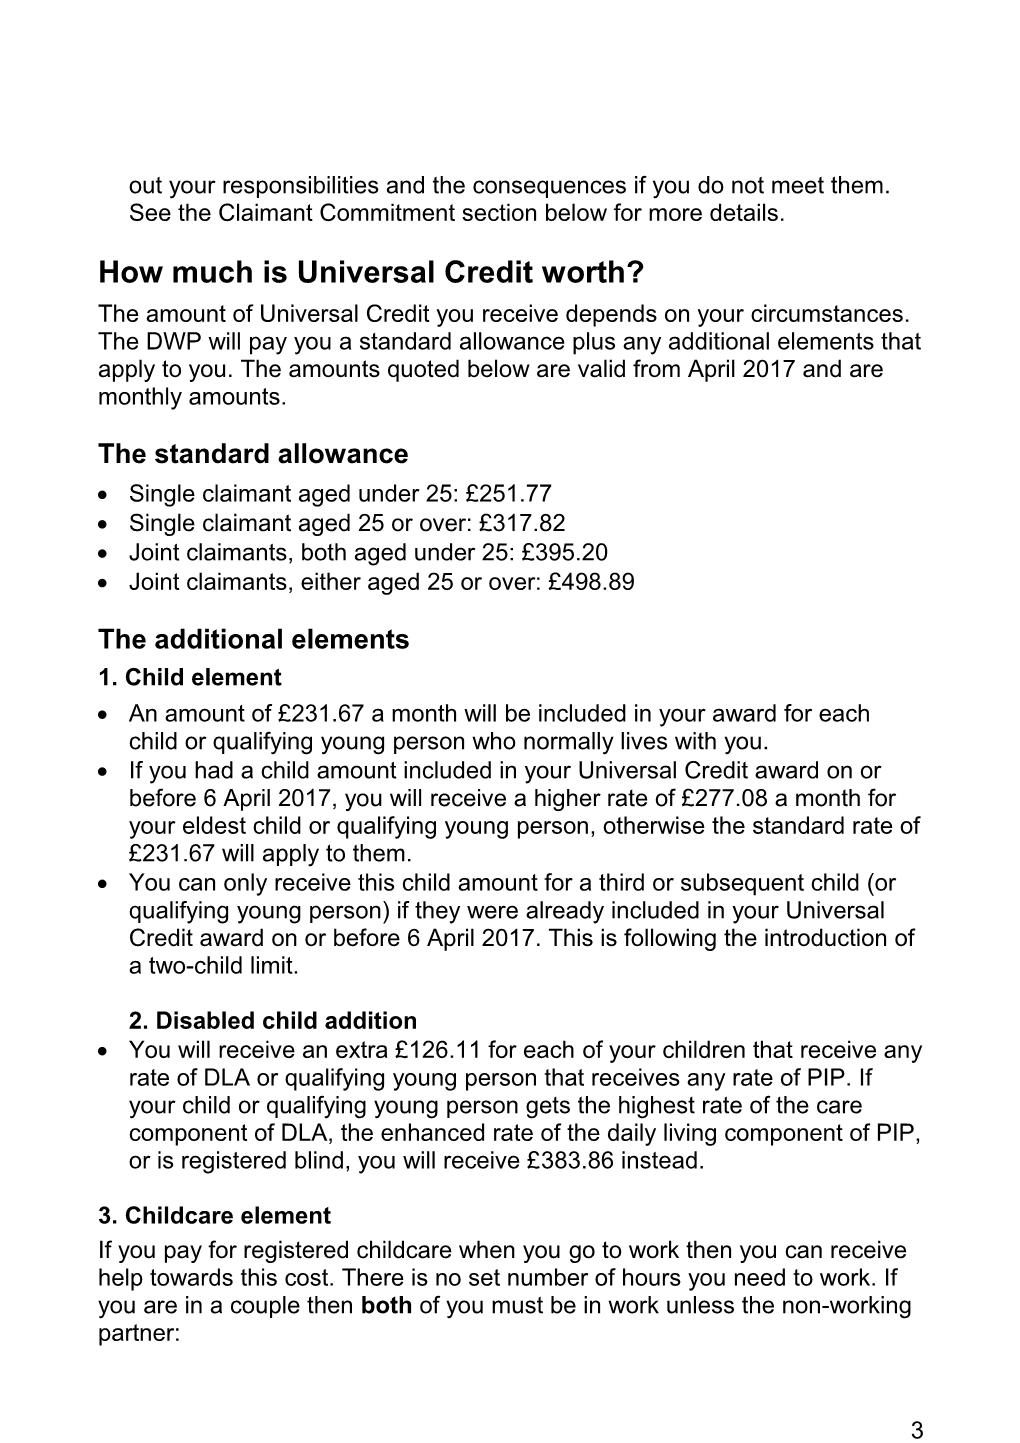 Universal Credit Factsheet